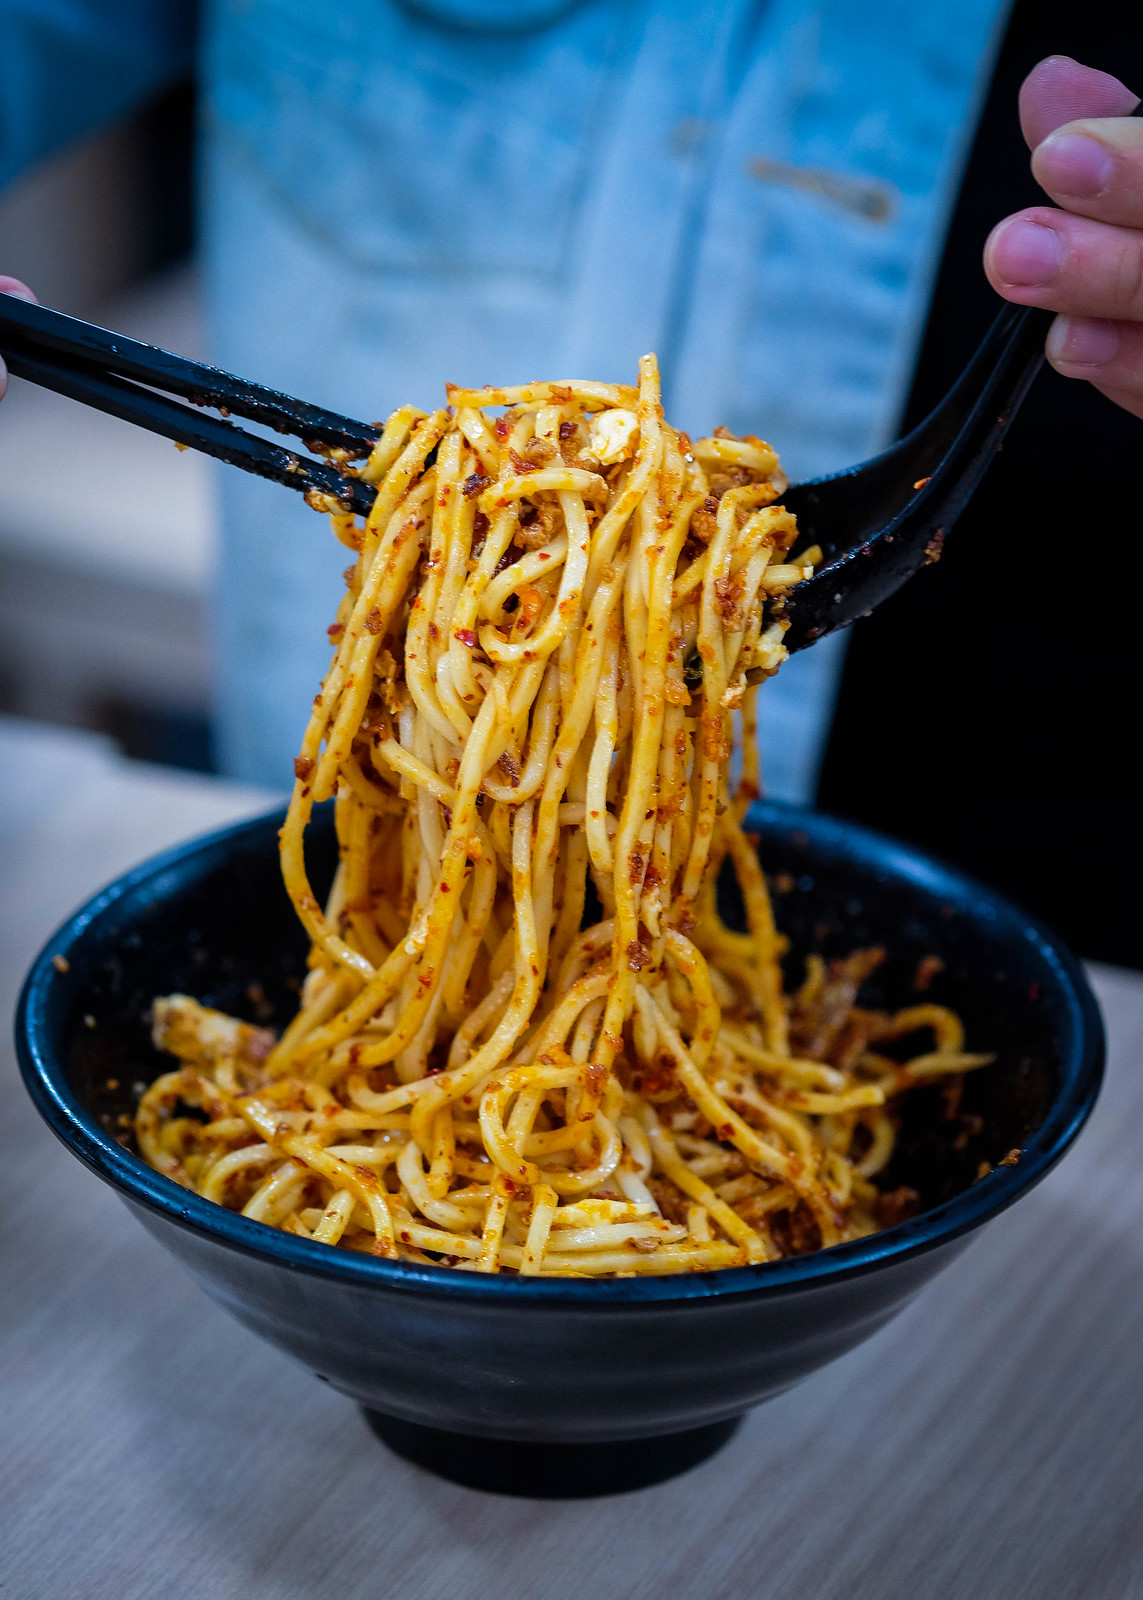 Chilli Pan Mee (Batu Road) - Tasty Noodles in the Heart of CBD!